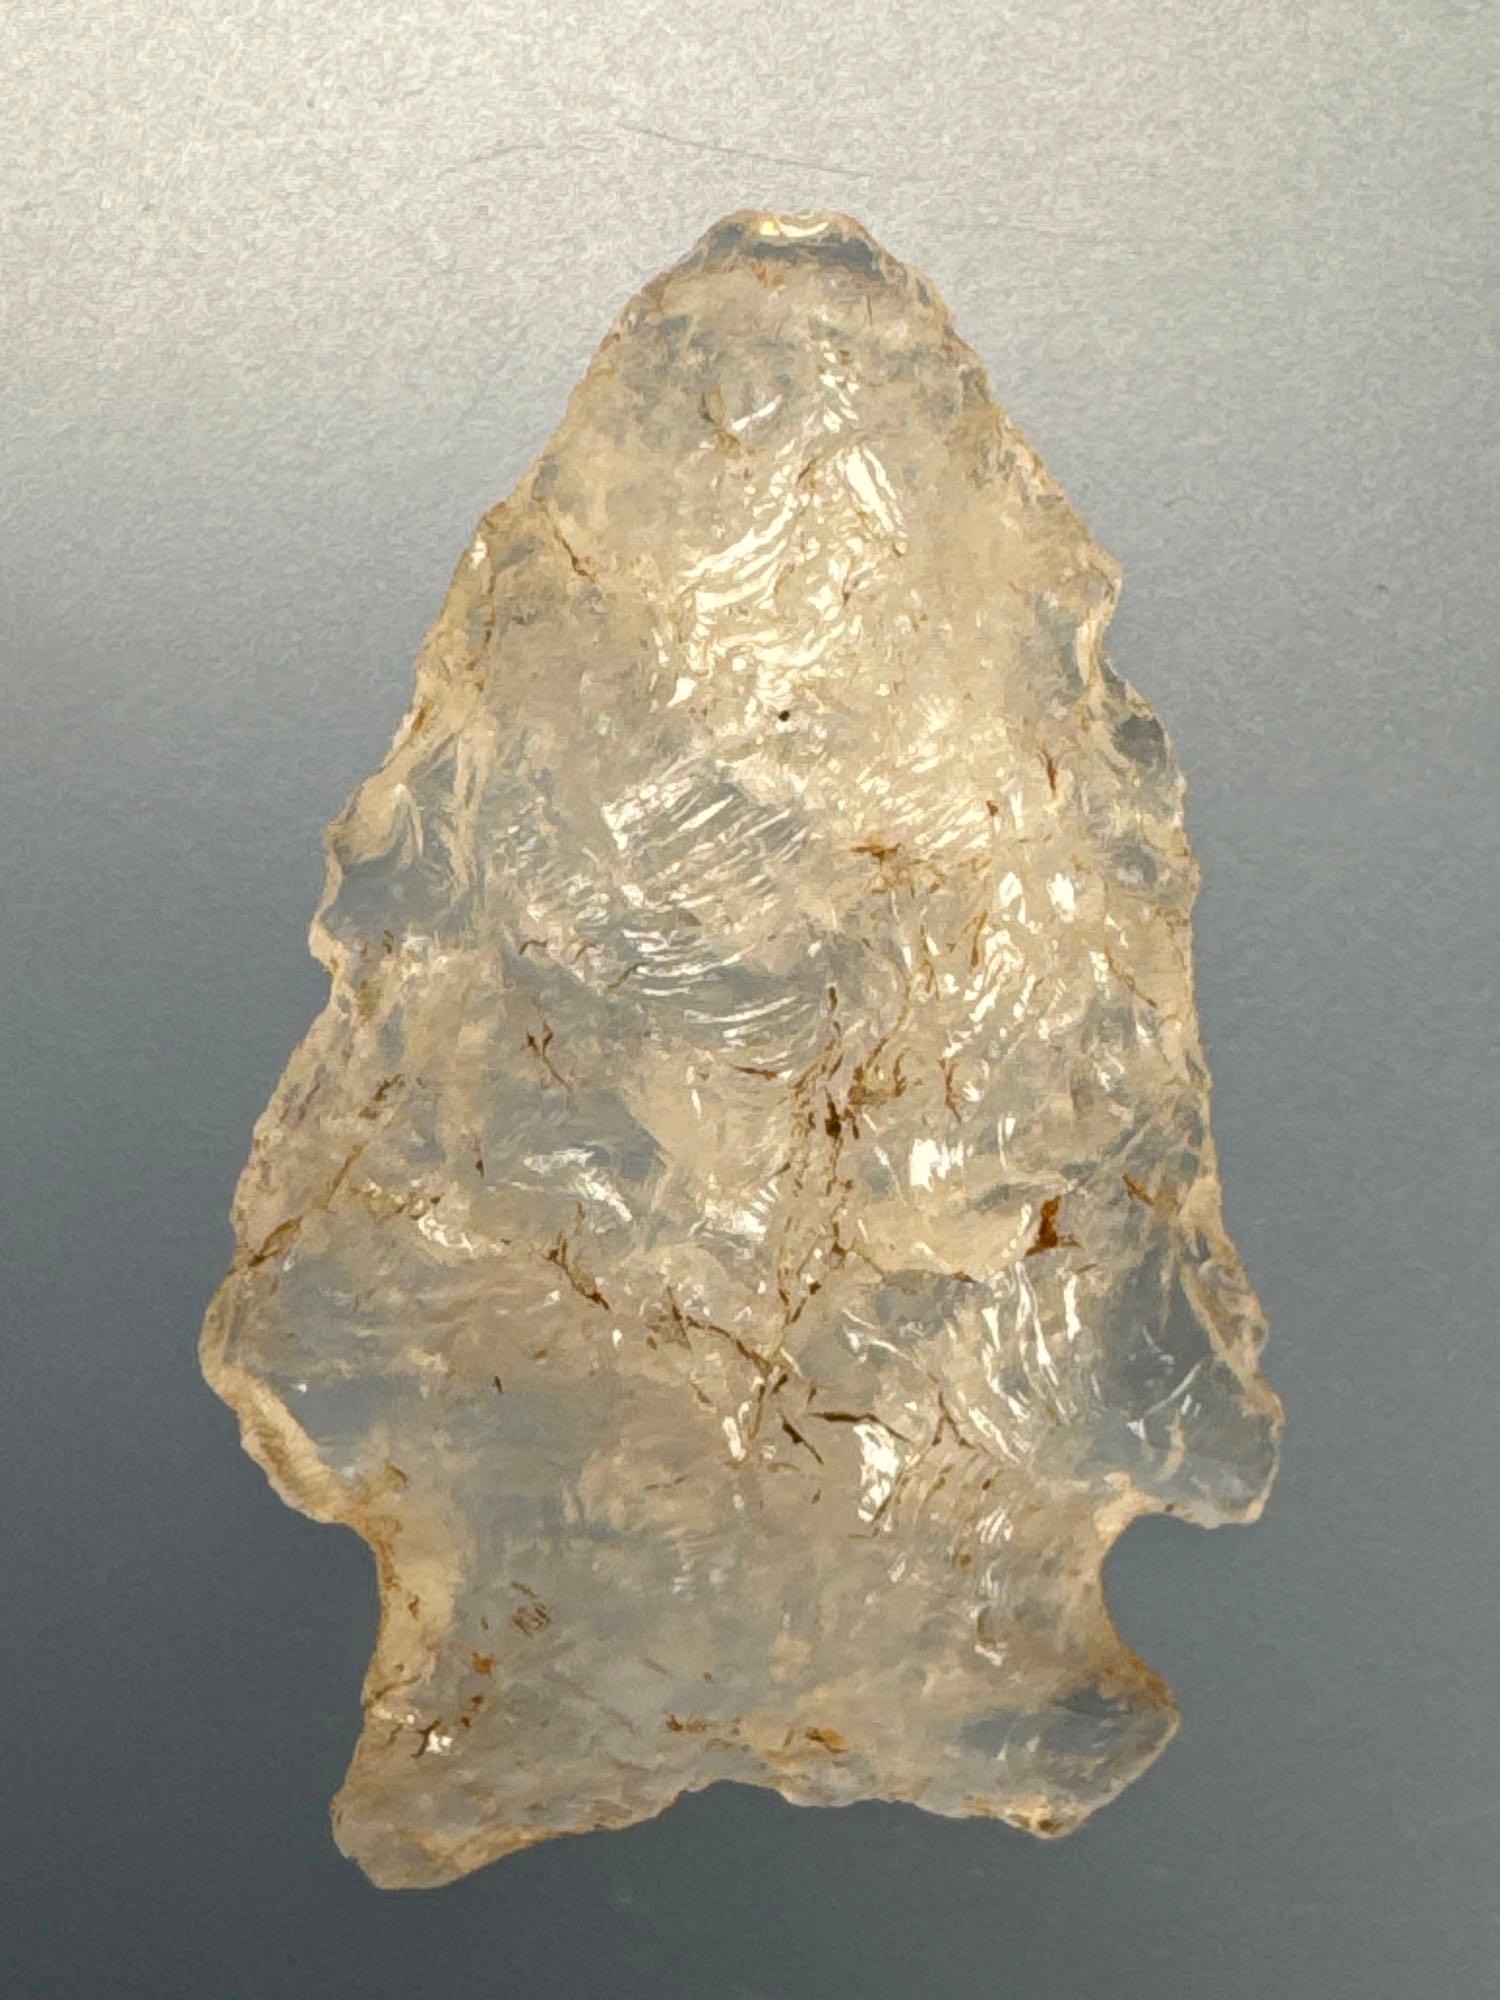 RARE 1 3/16" Crystal Quartz Point, Well-Made, Found in North Carolina